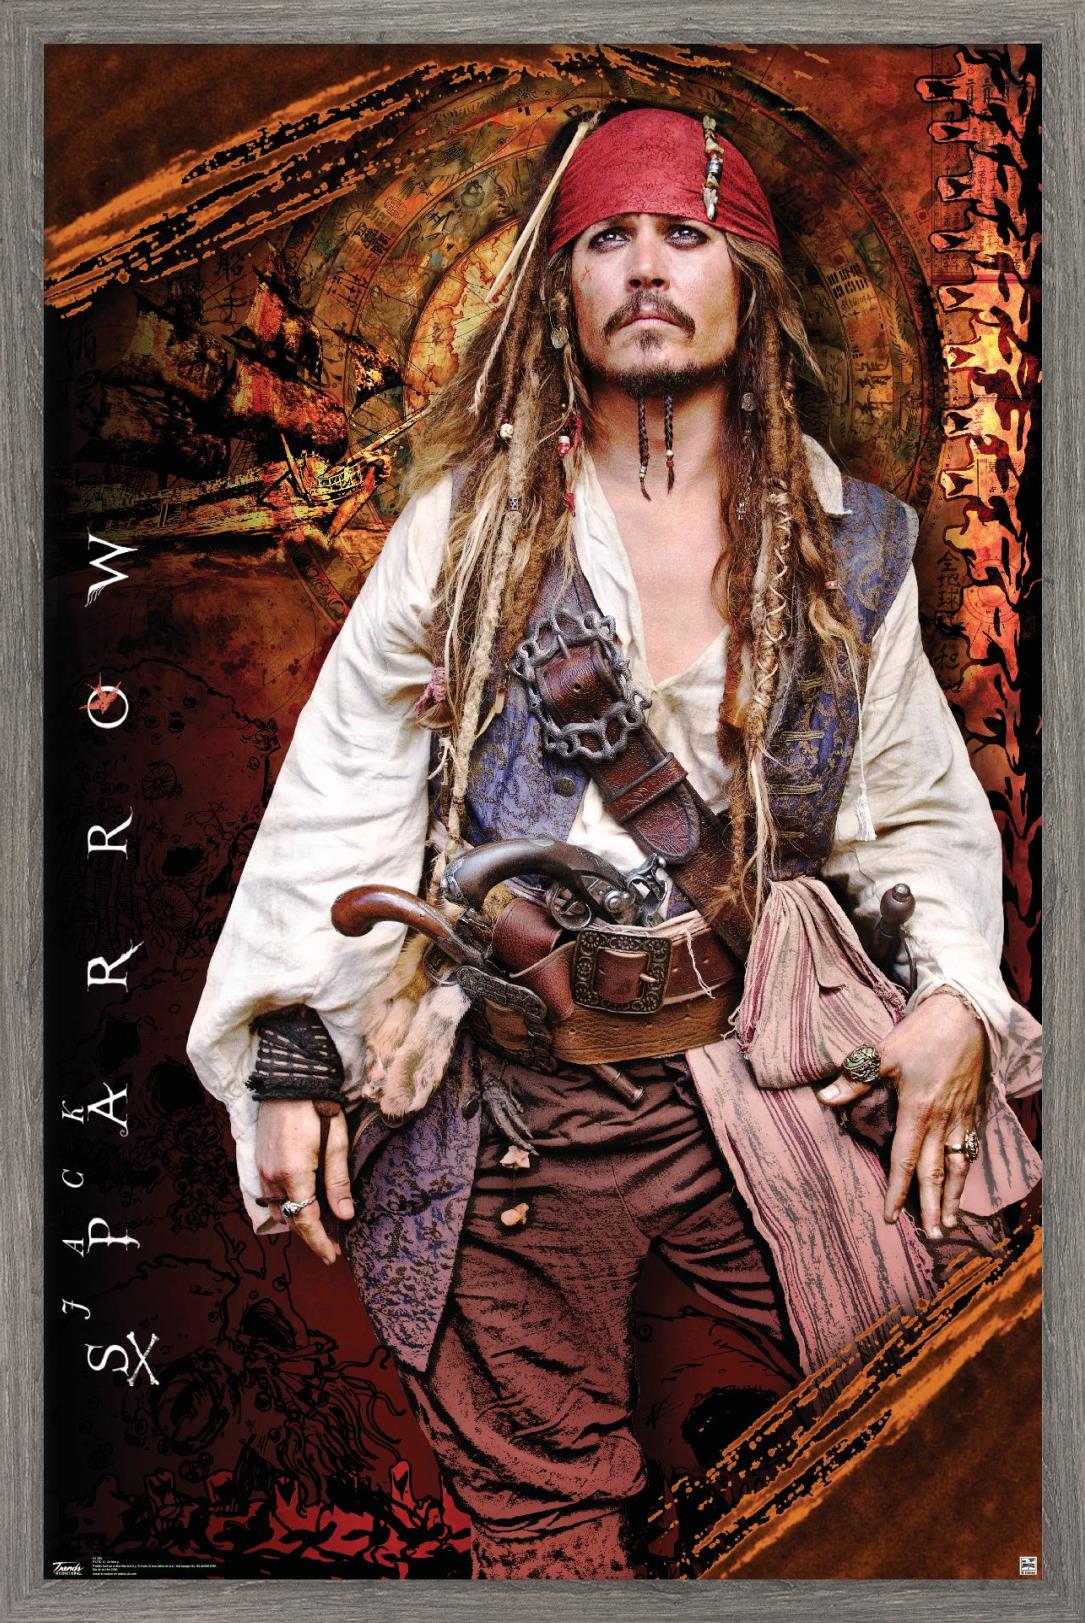 Disney Pirates of the Caribbean: On Stranger Tides - Johnny Depp Wall Poster, 22.375" x 34", Framed - image 1 of 5